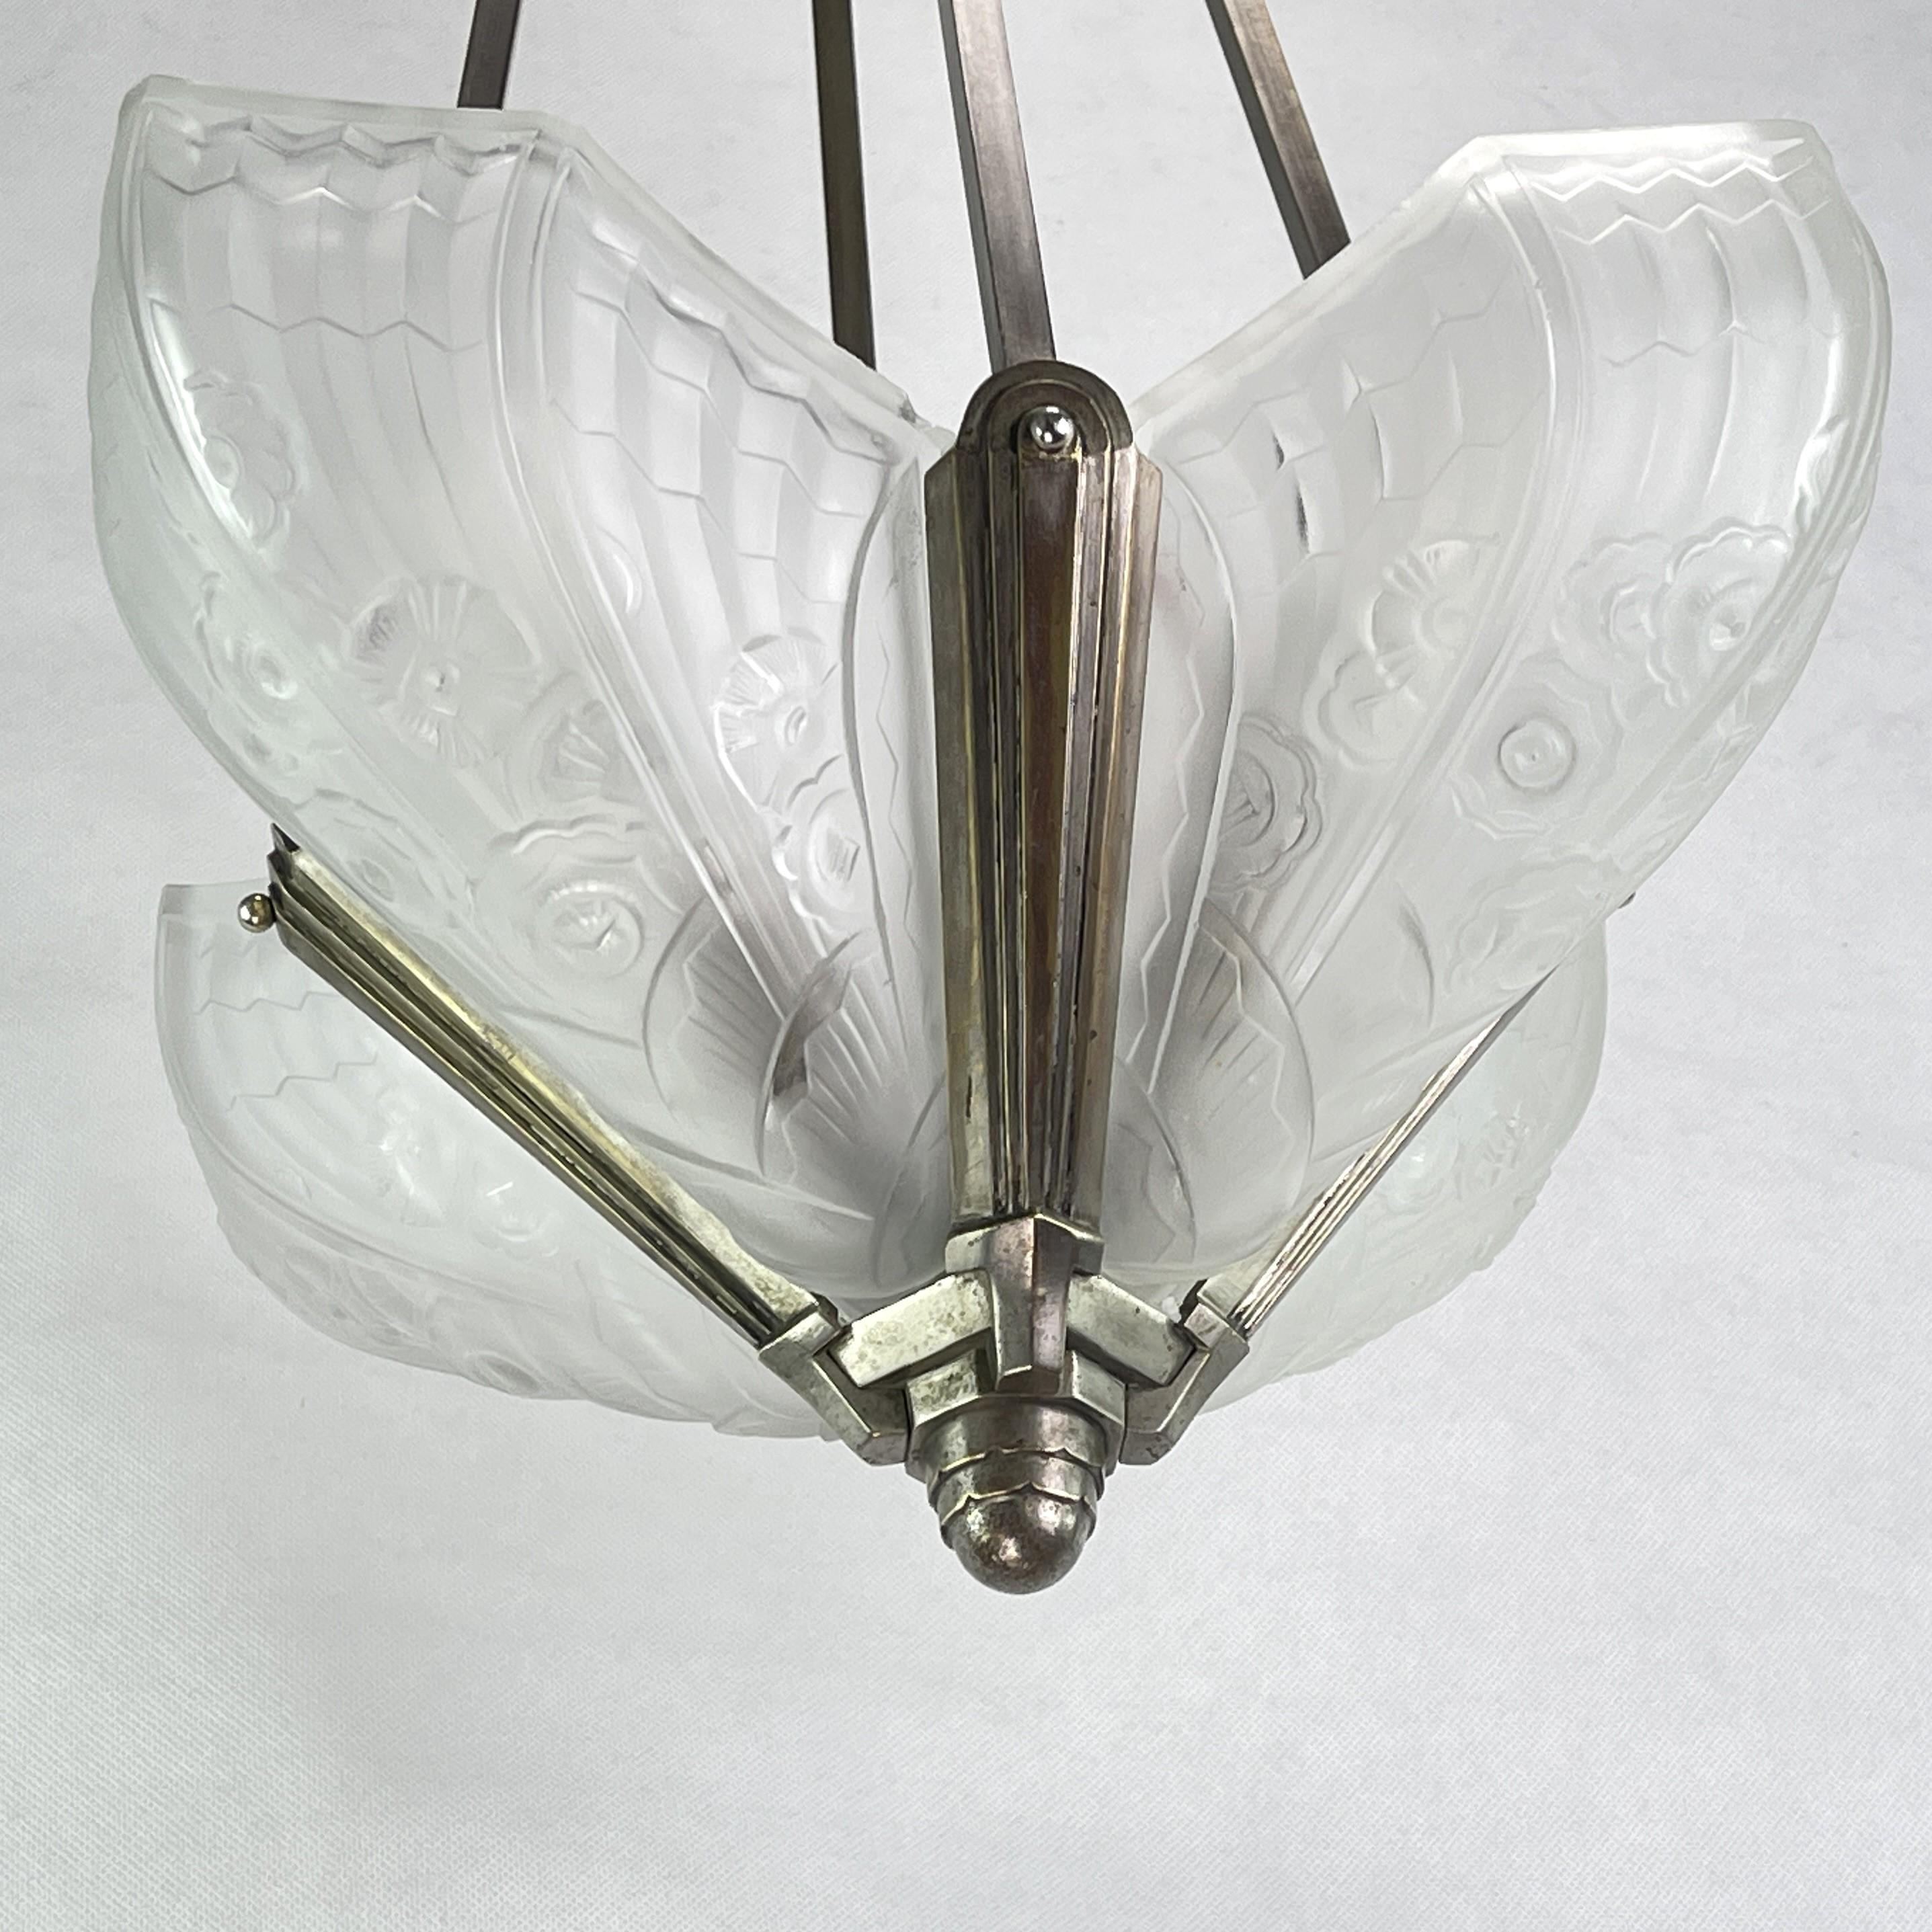 Art Deco Chandelier Hanging Lamp by Jean Gauthier for J. Robert Paris, 1930s For Sale 3